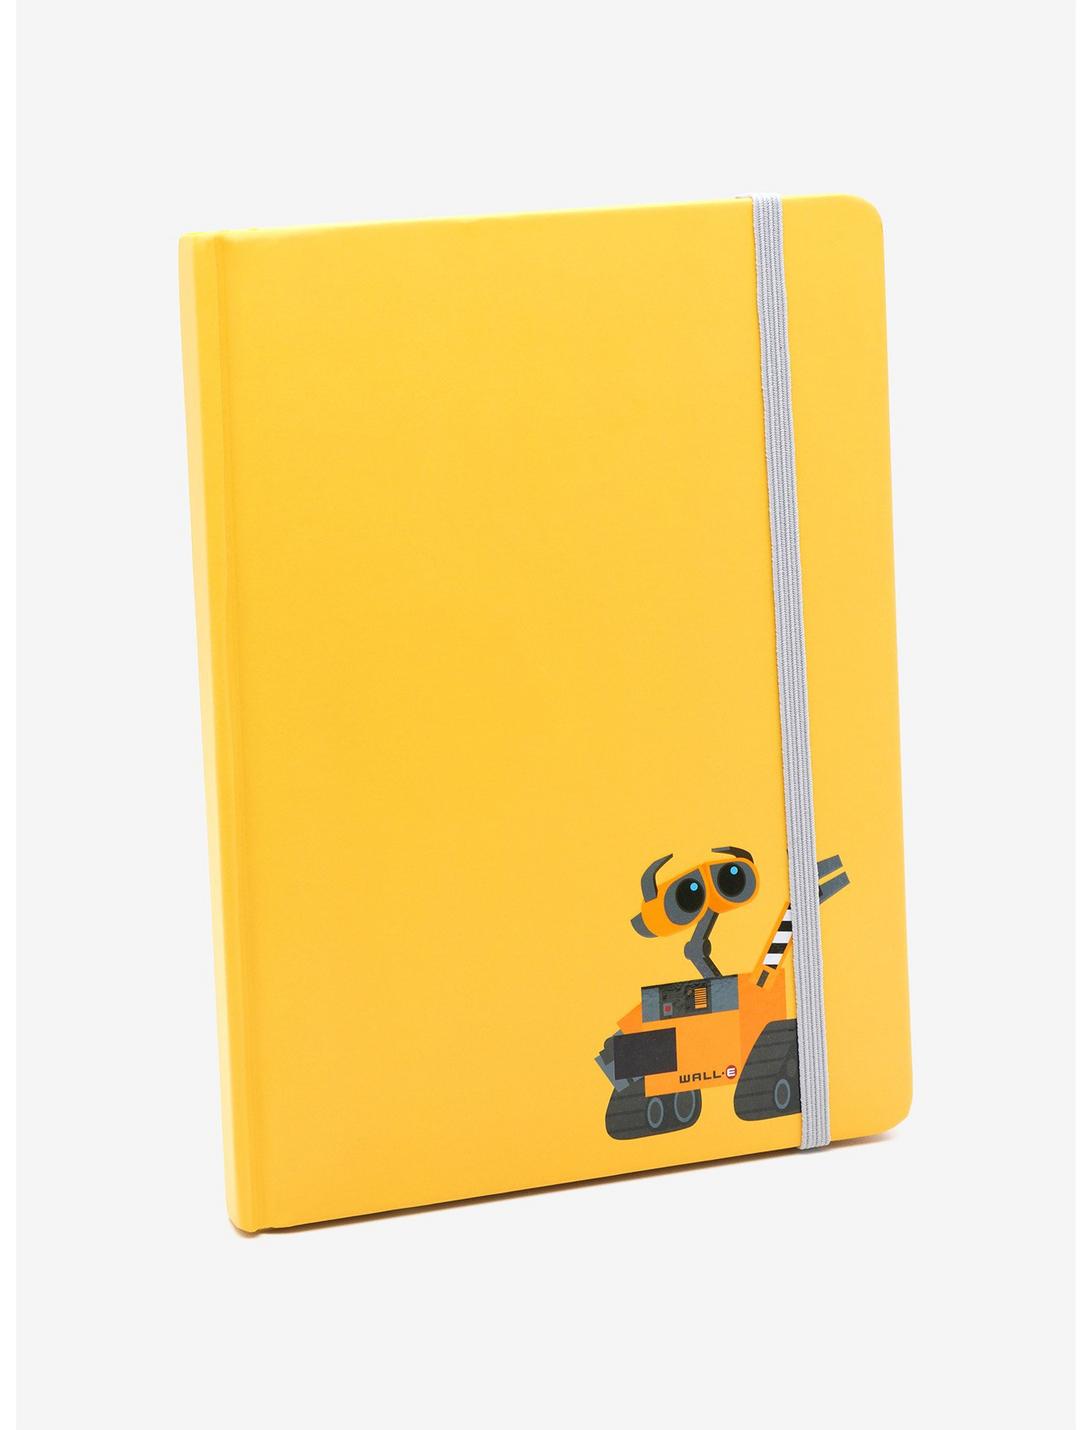 Disney Pixar Wall-E Yellow Journal, , hi-res